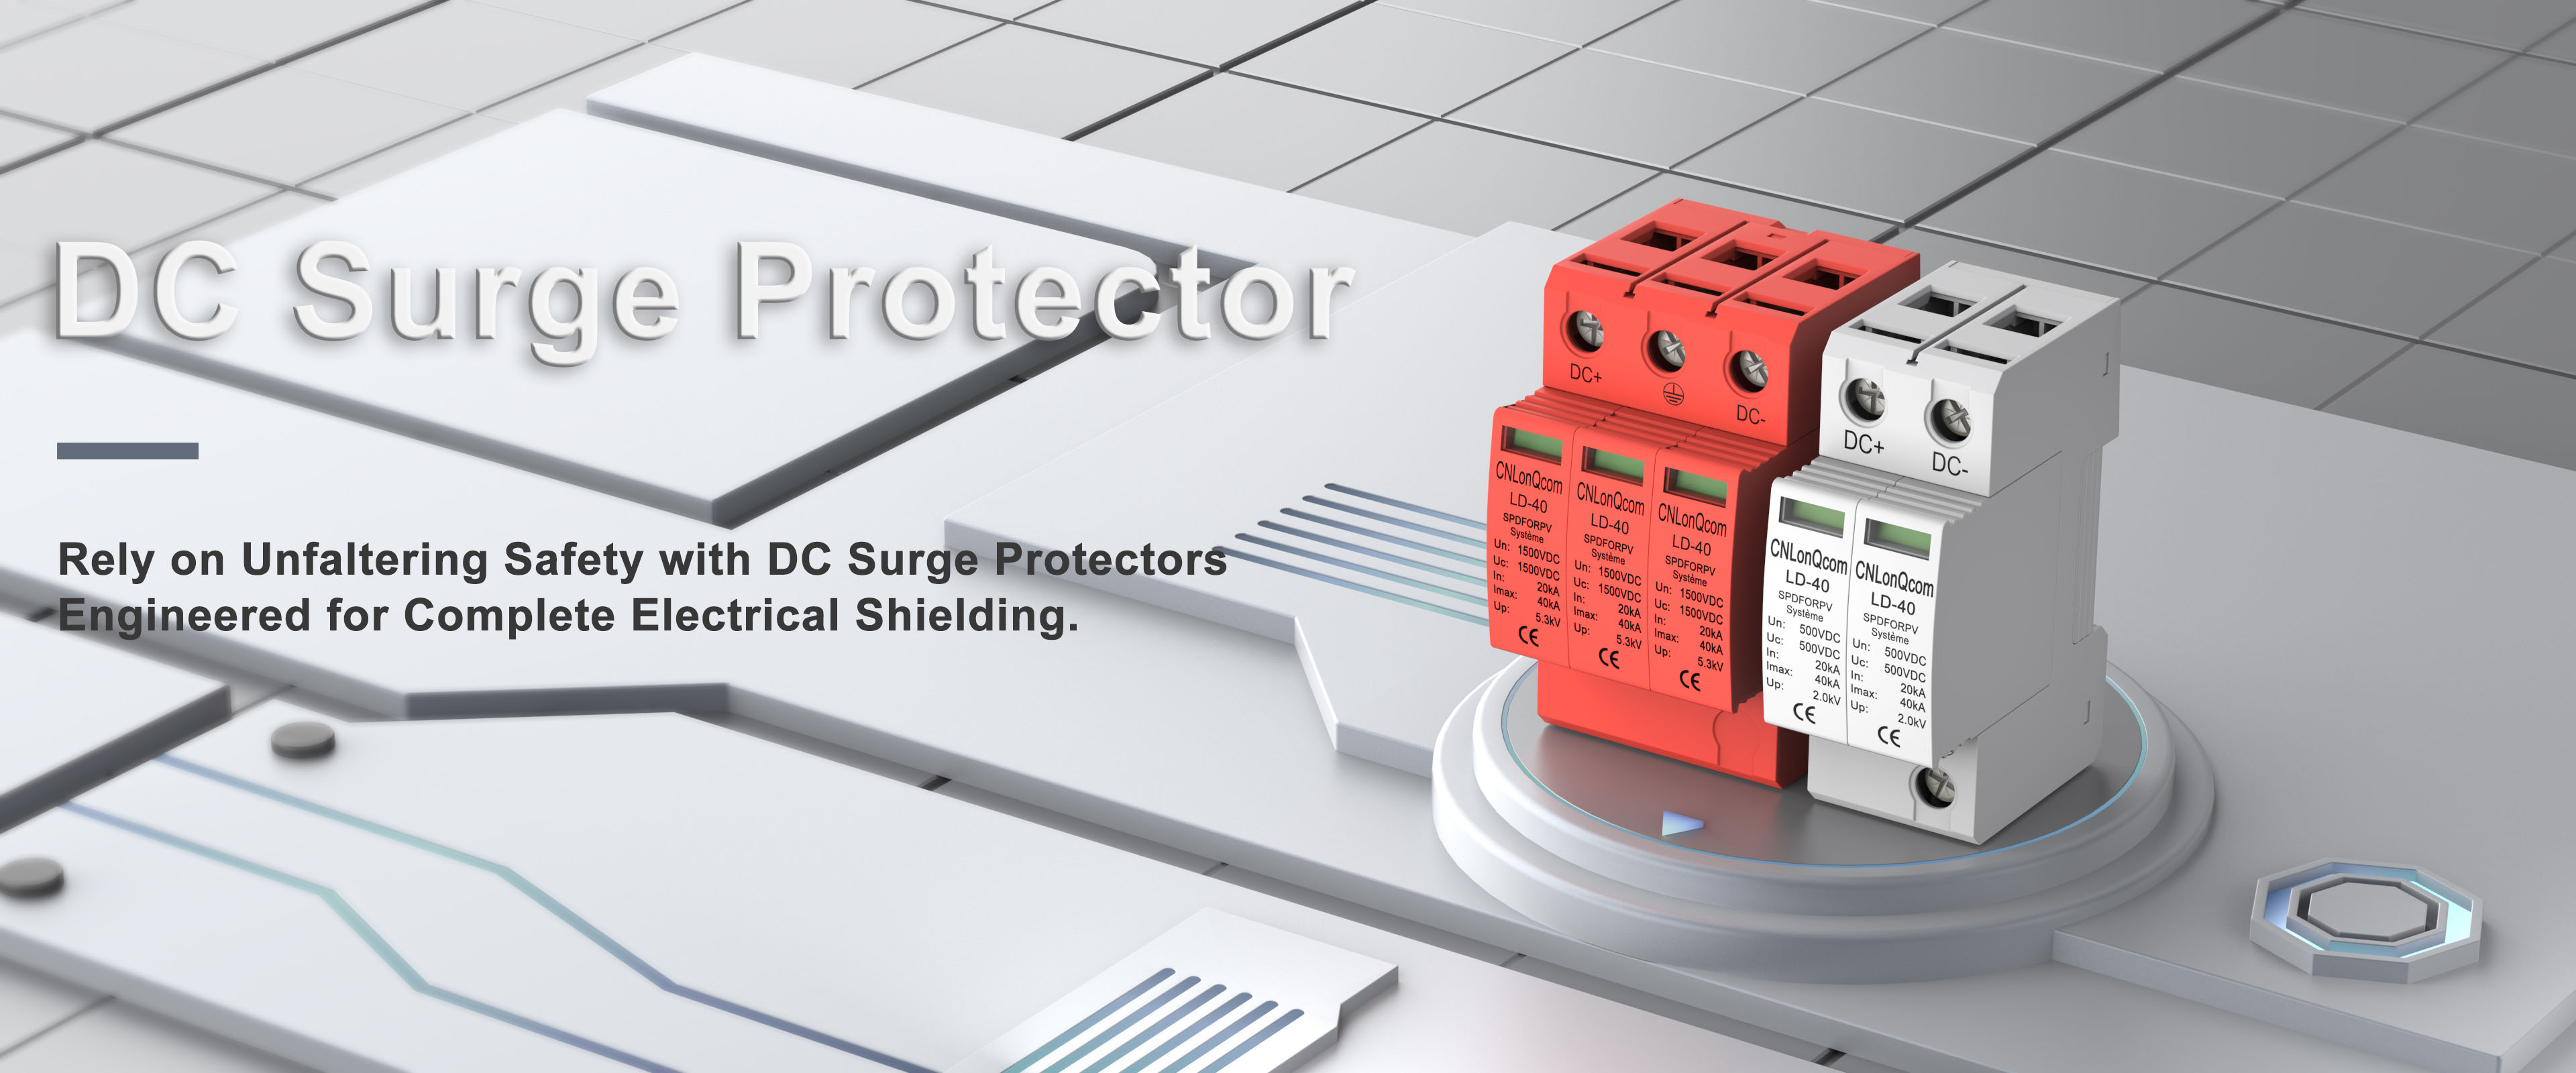 DC Surge Protectoris Manufacturer